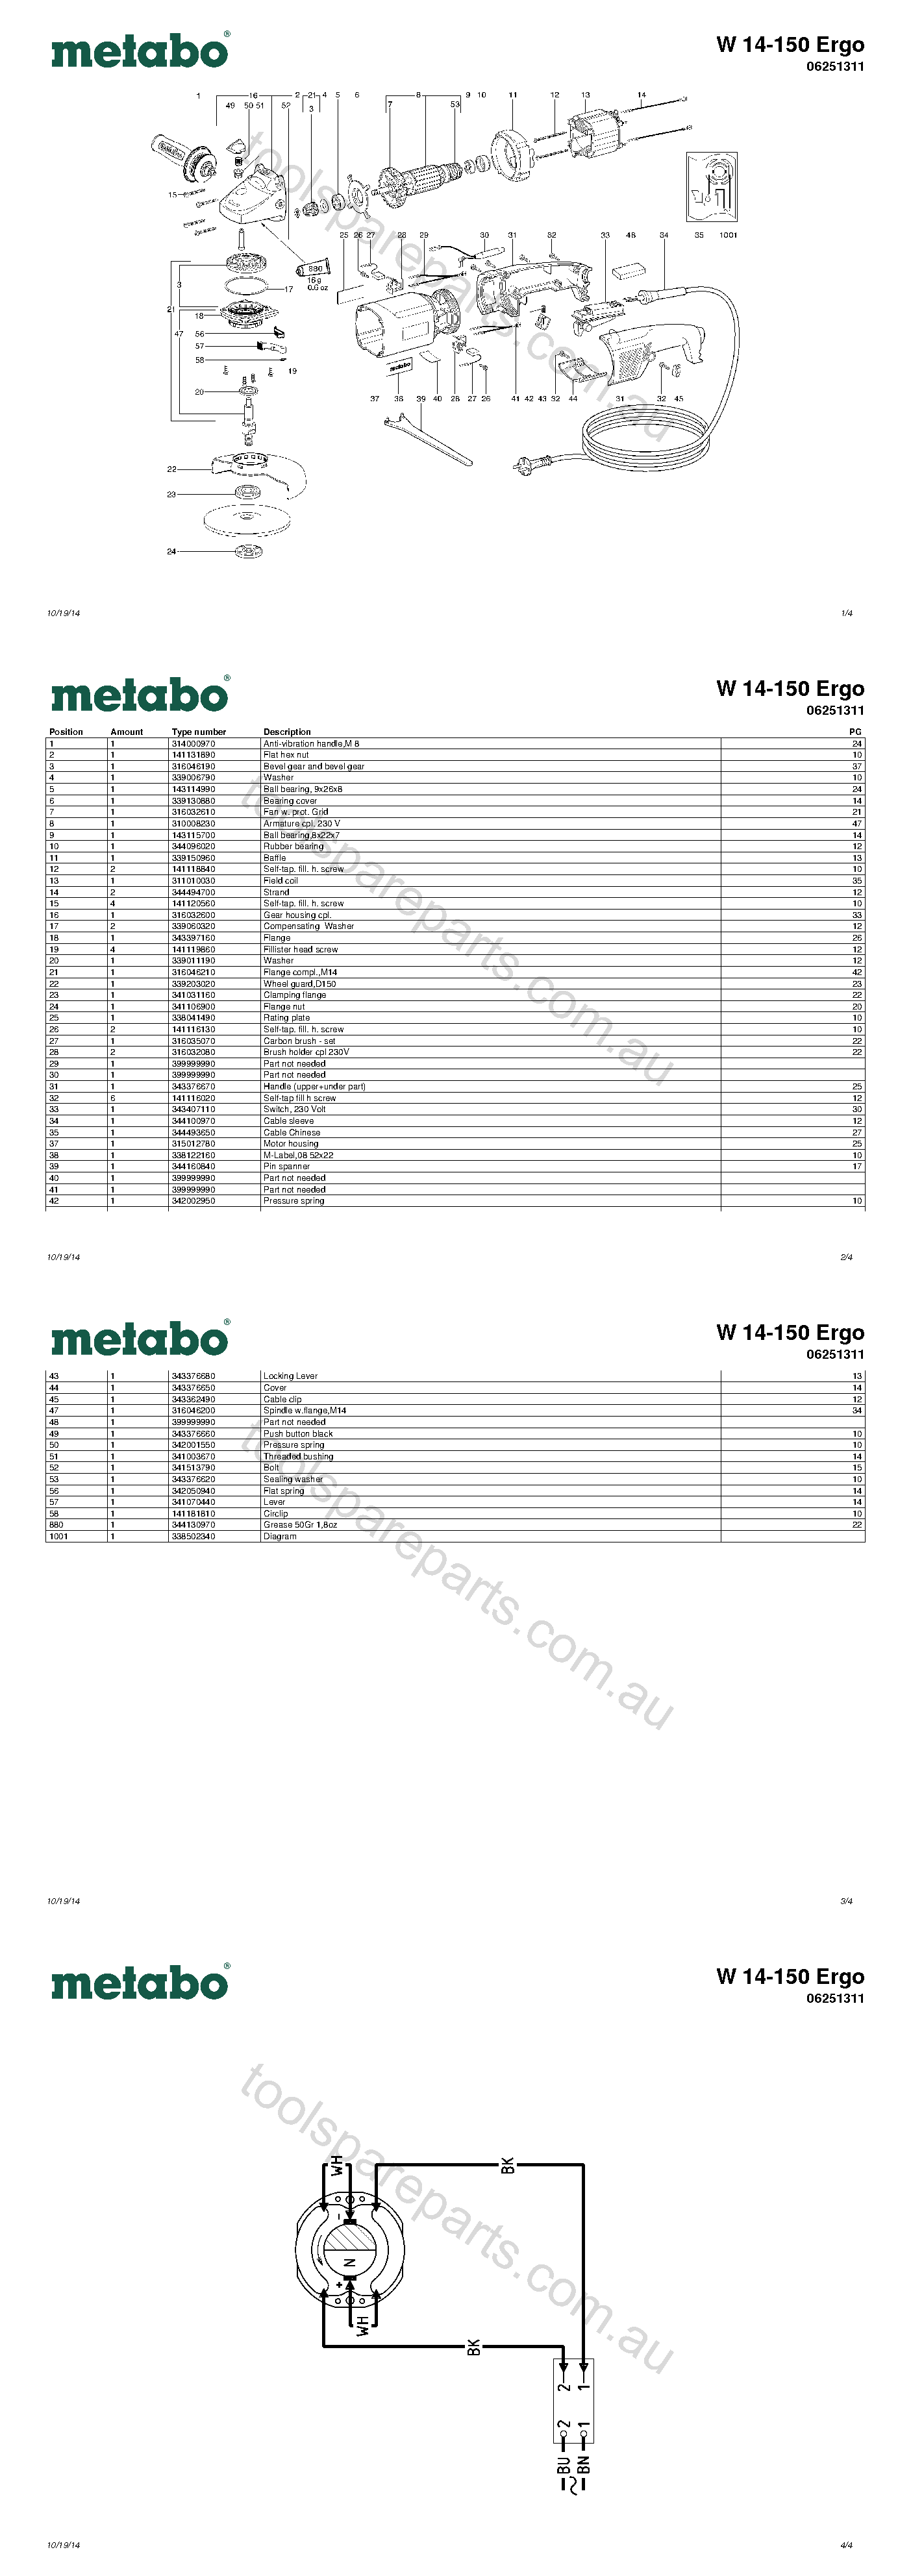 Metabo W 14-150 Ergo 06251311  Diagram 1